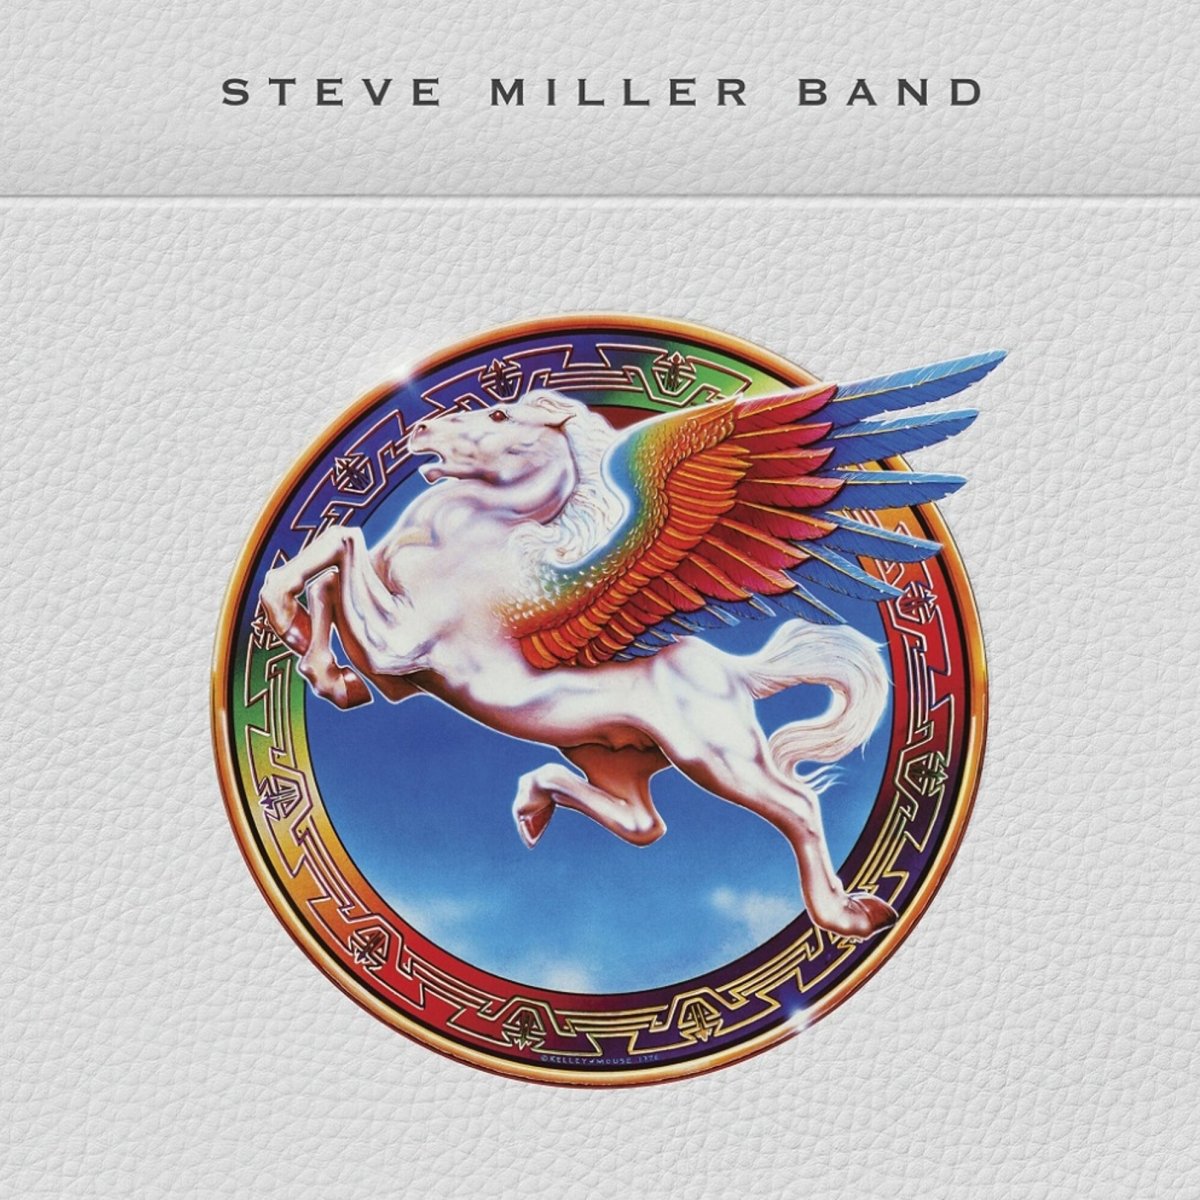 Steve Miller Band - Complete Albums Volume 2 Vinyl Box Set Vinyl